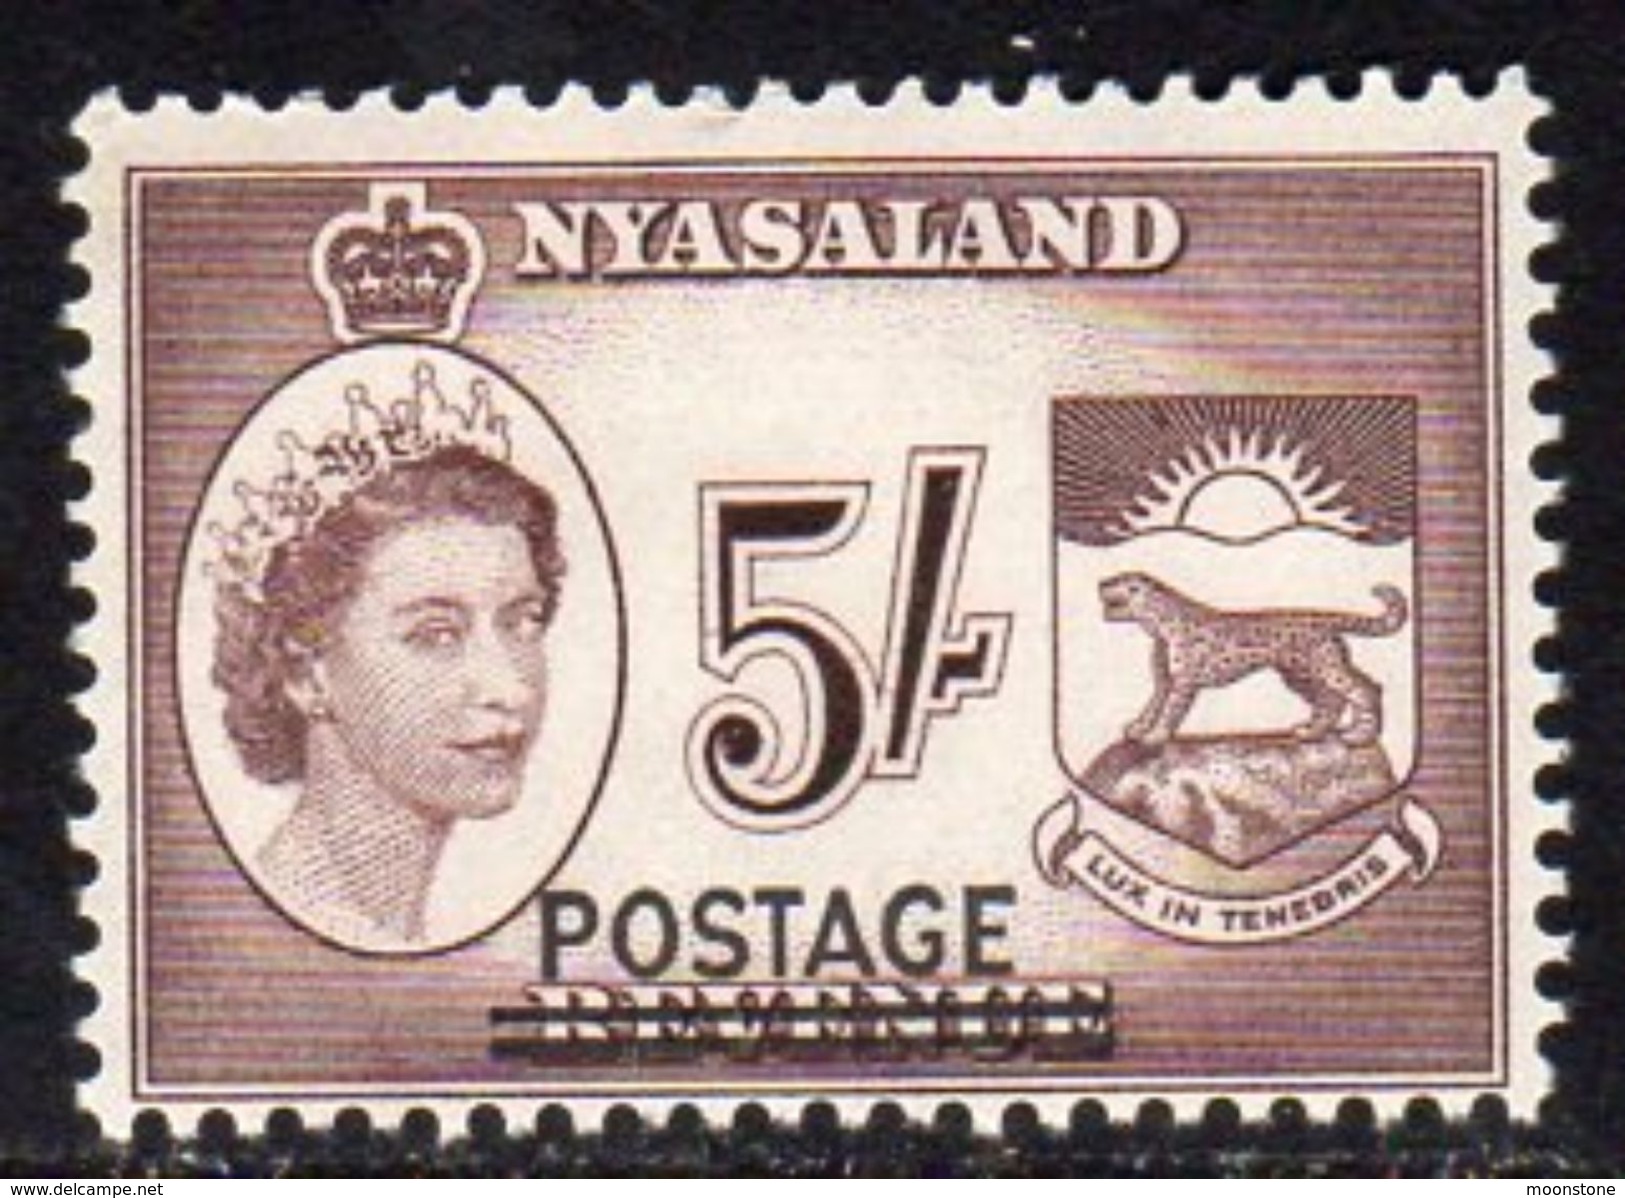 Nyasaland 1963 Revenue Stamp Overprinted Postage 5/- Value, MNH, SG 196 (BA2) - Nyasaland (1907-1953)